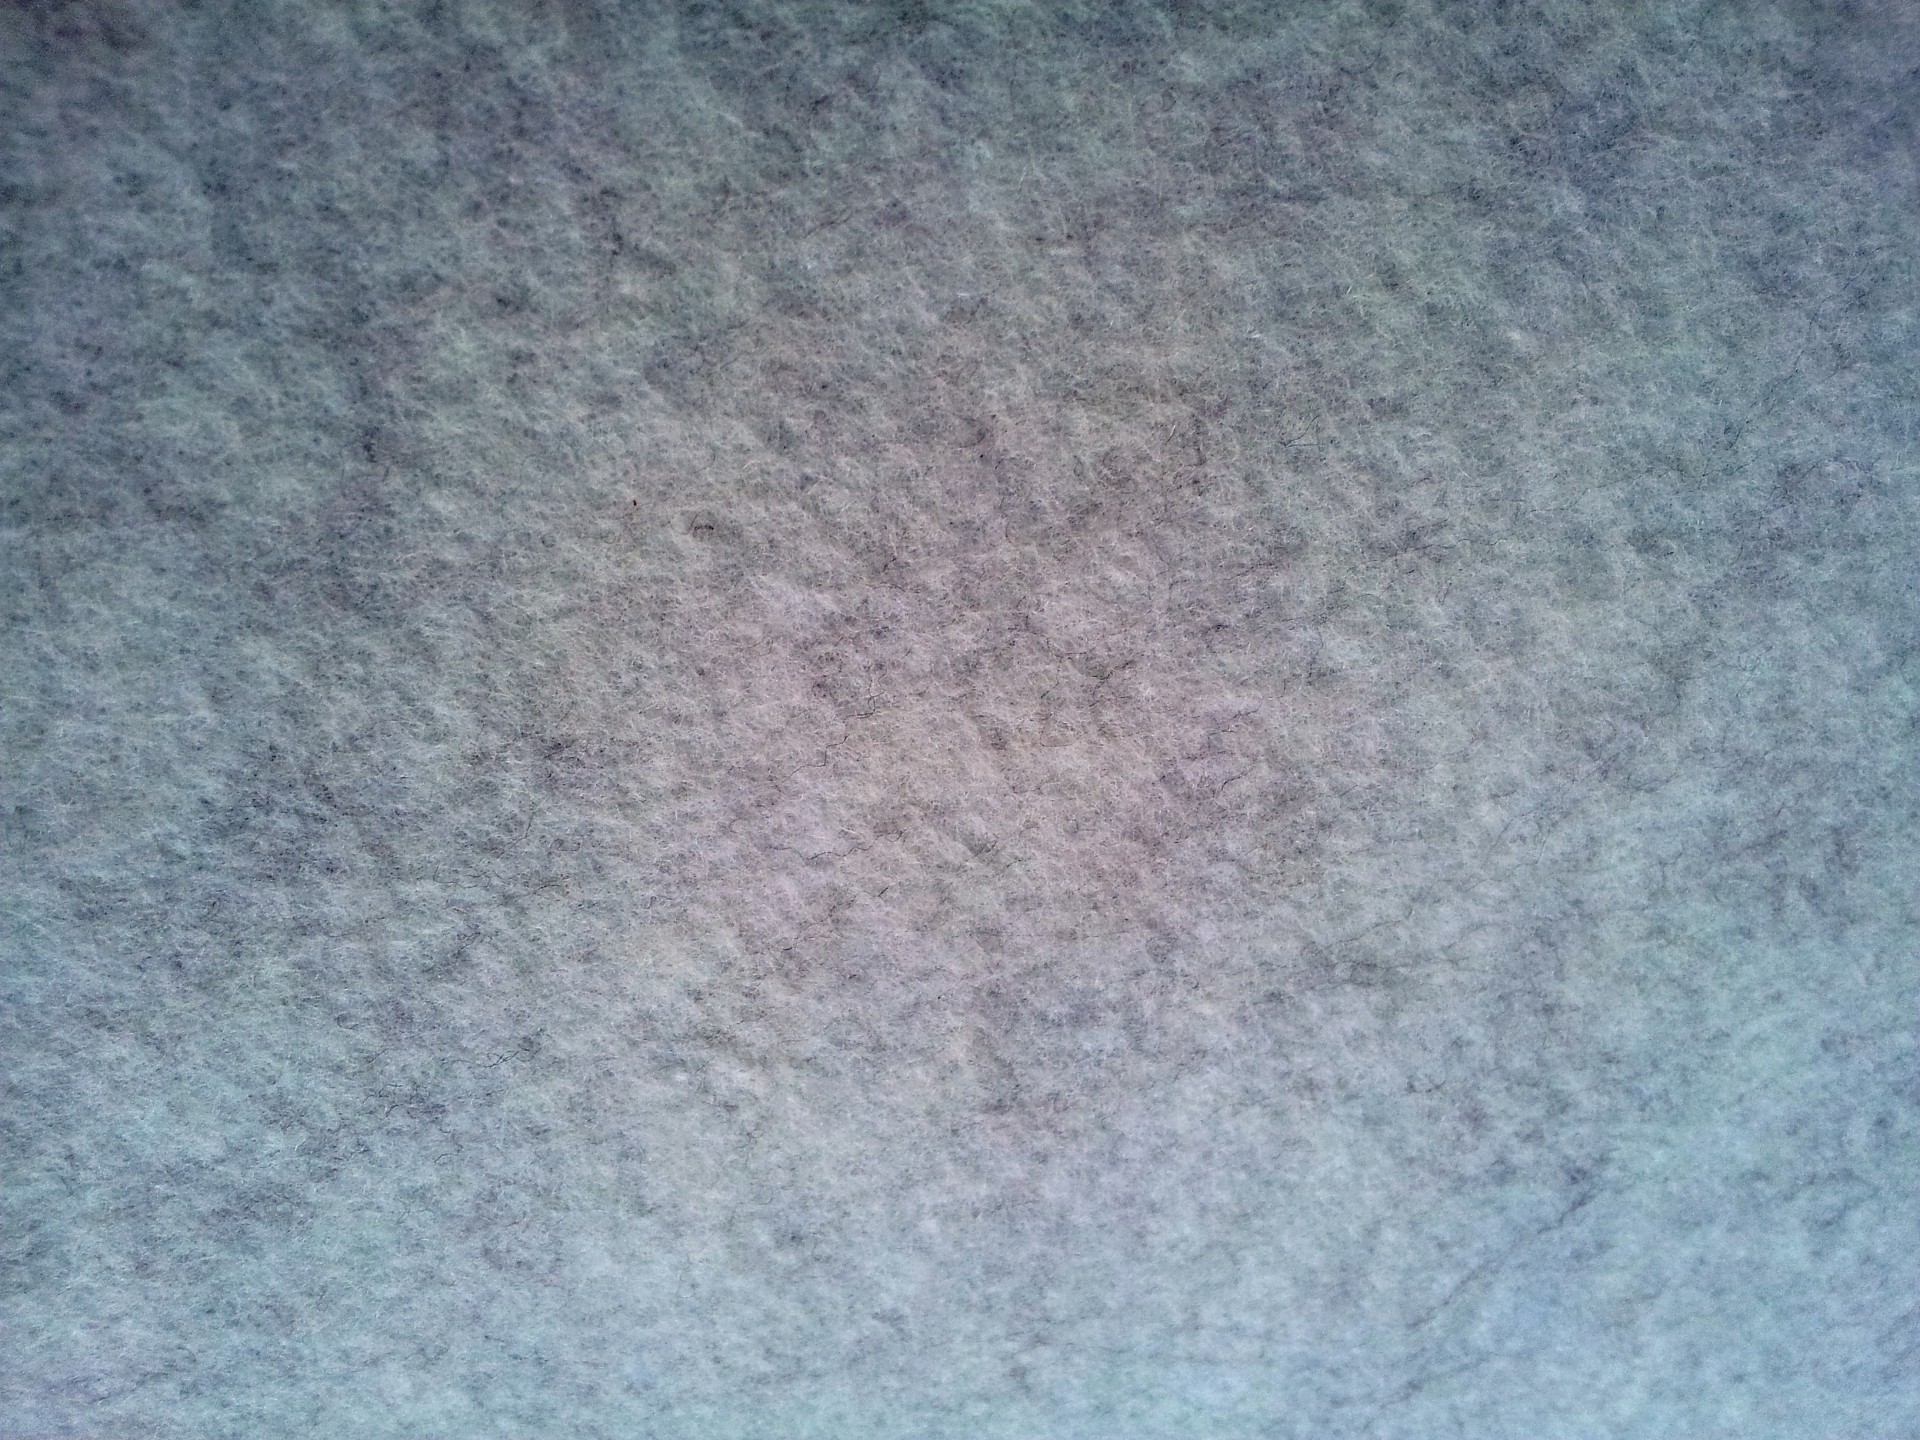 cotton texture surface free photo